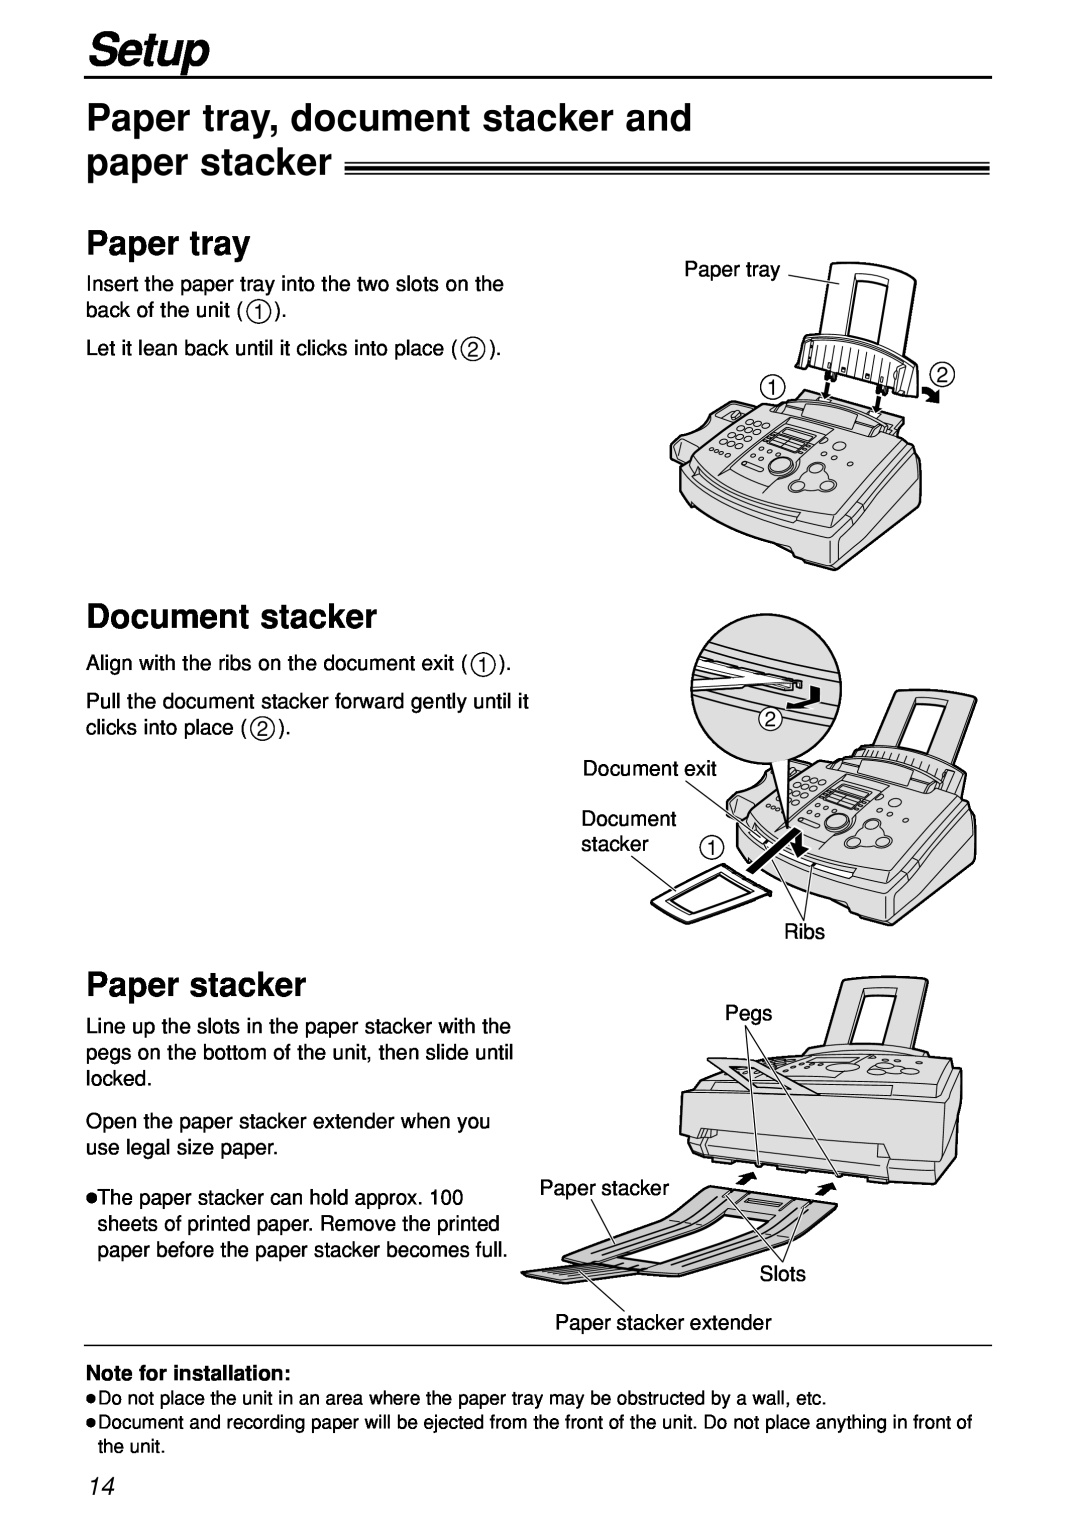 Panasonic KX-FL501C manual Paper tray, document stacker and paper stacker, Document stacker, Paper stacker, Setup 